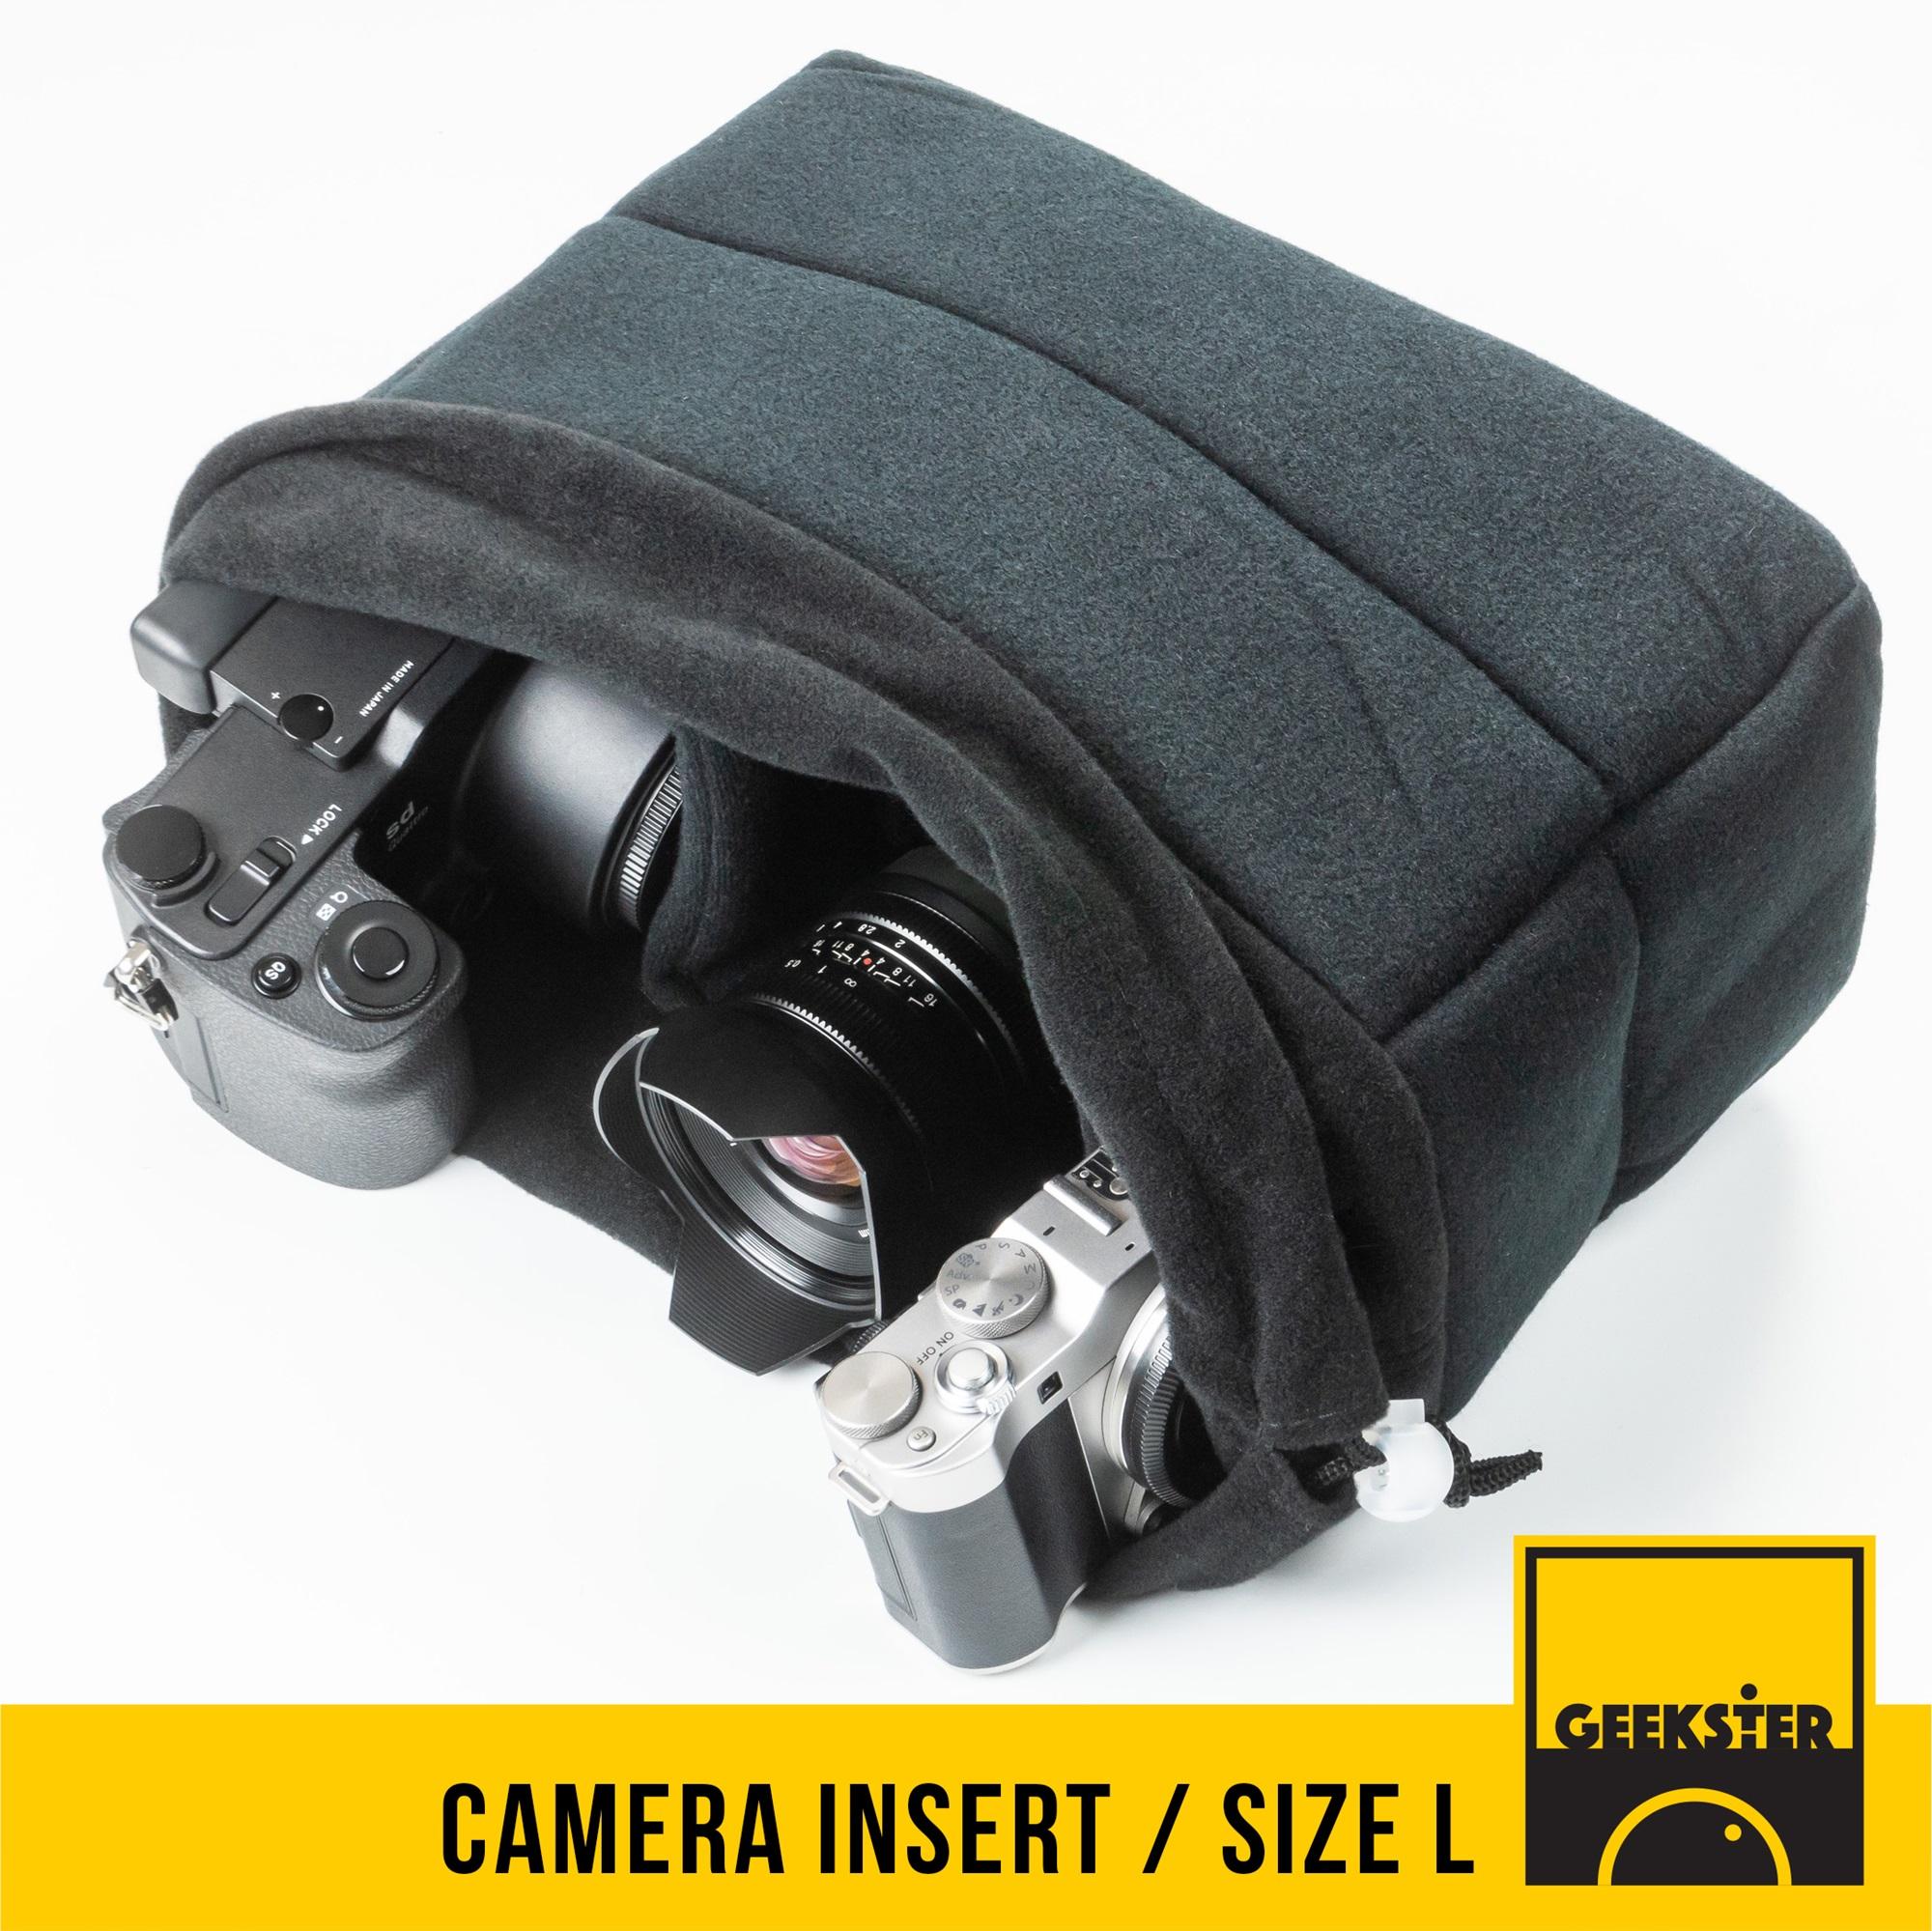 Insert กันกระแทก กระเป๋ากล้อง Size L กล้อง ขนาดโดยประมาณ 26cm x 12cm x 16cm ( Camera Insert ) ( Lens Insert ) ( กระเป๋าเลนส์ ) ( Geekster )